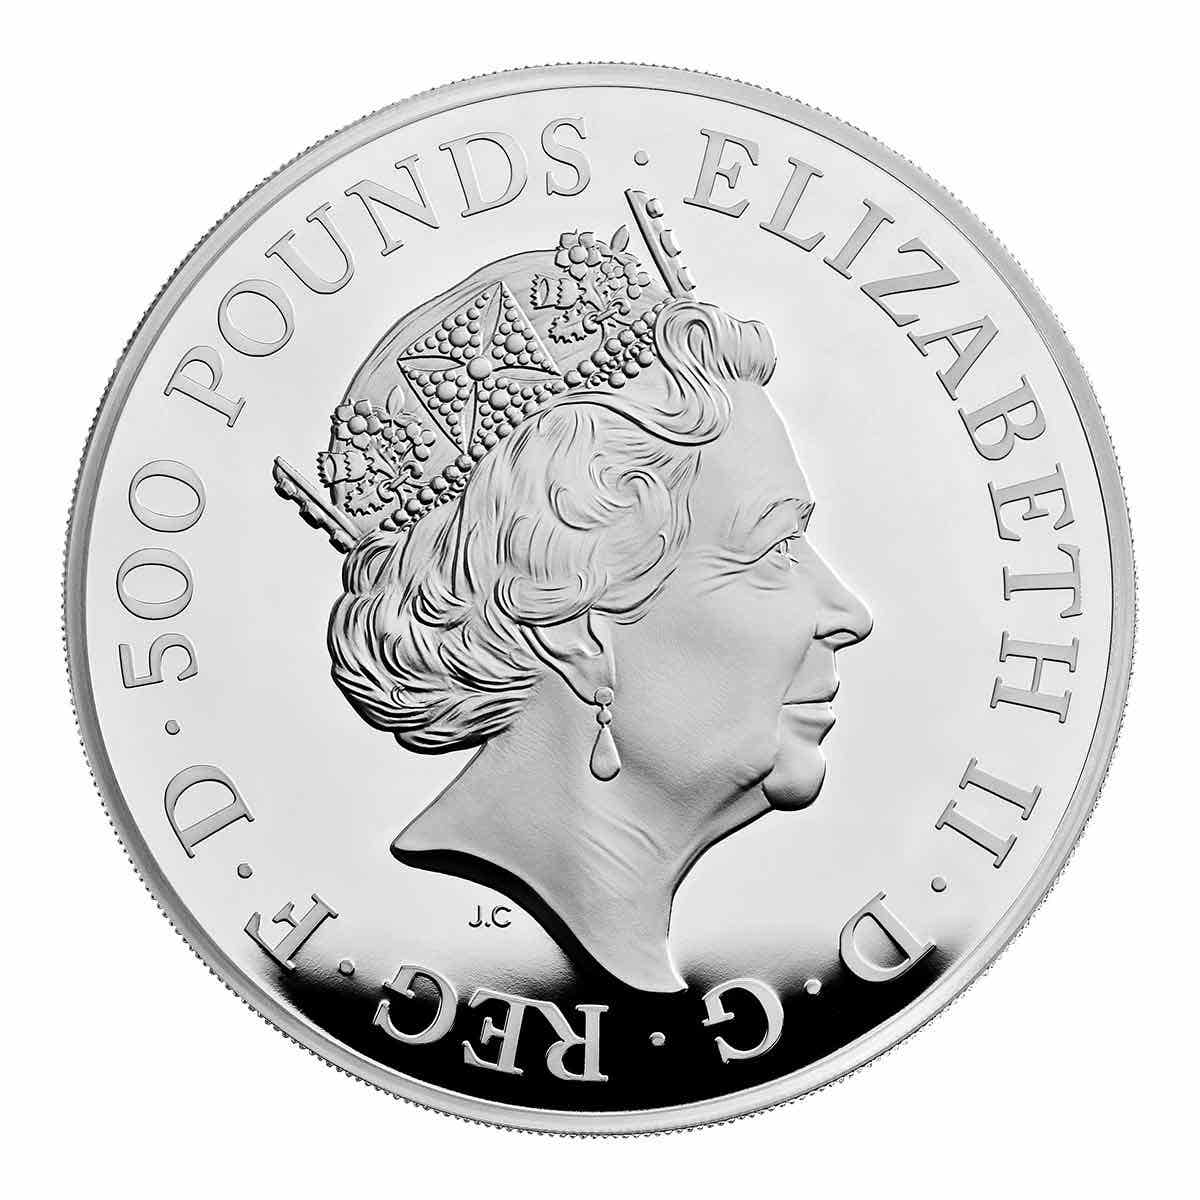 Royal Tudor Beasts The Lion of England 2022 £500 1 Kilo Silver Proof Coin